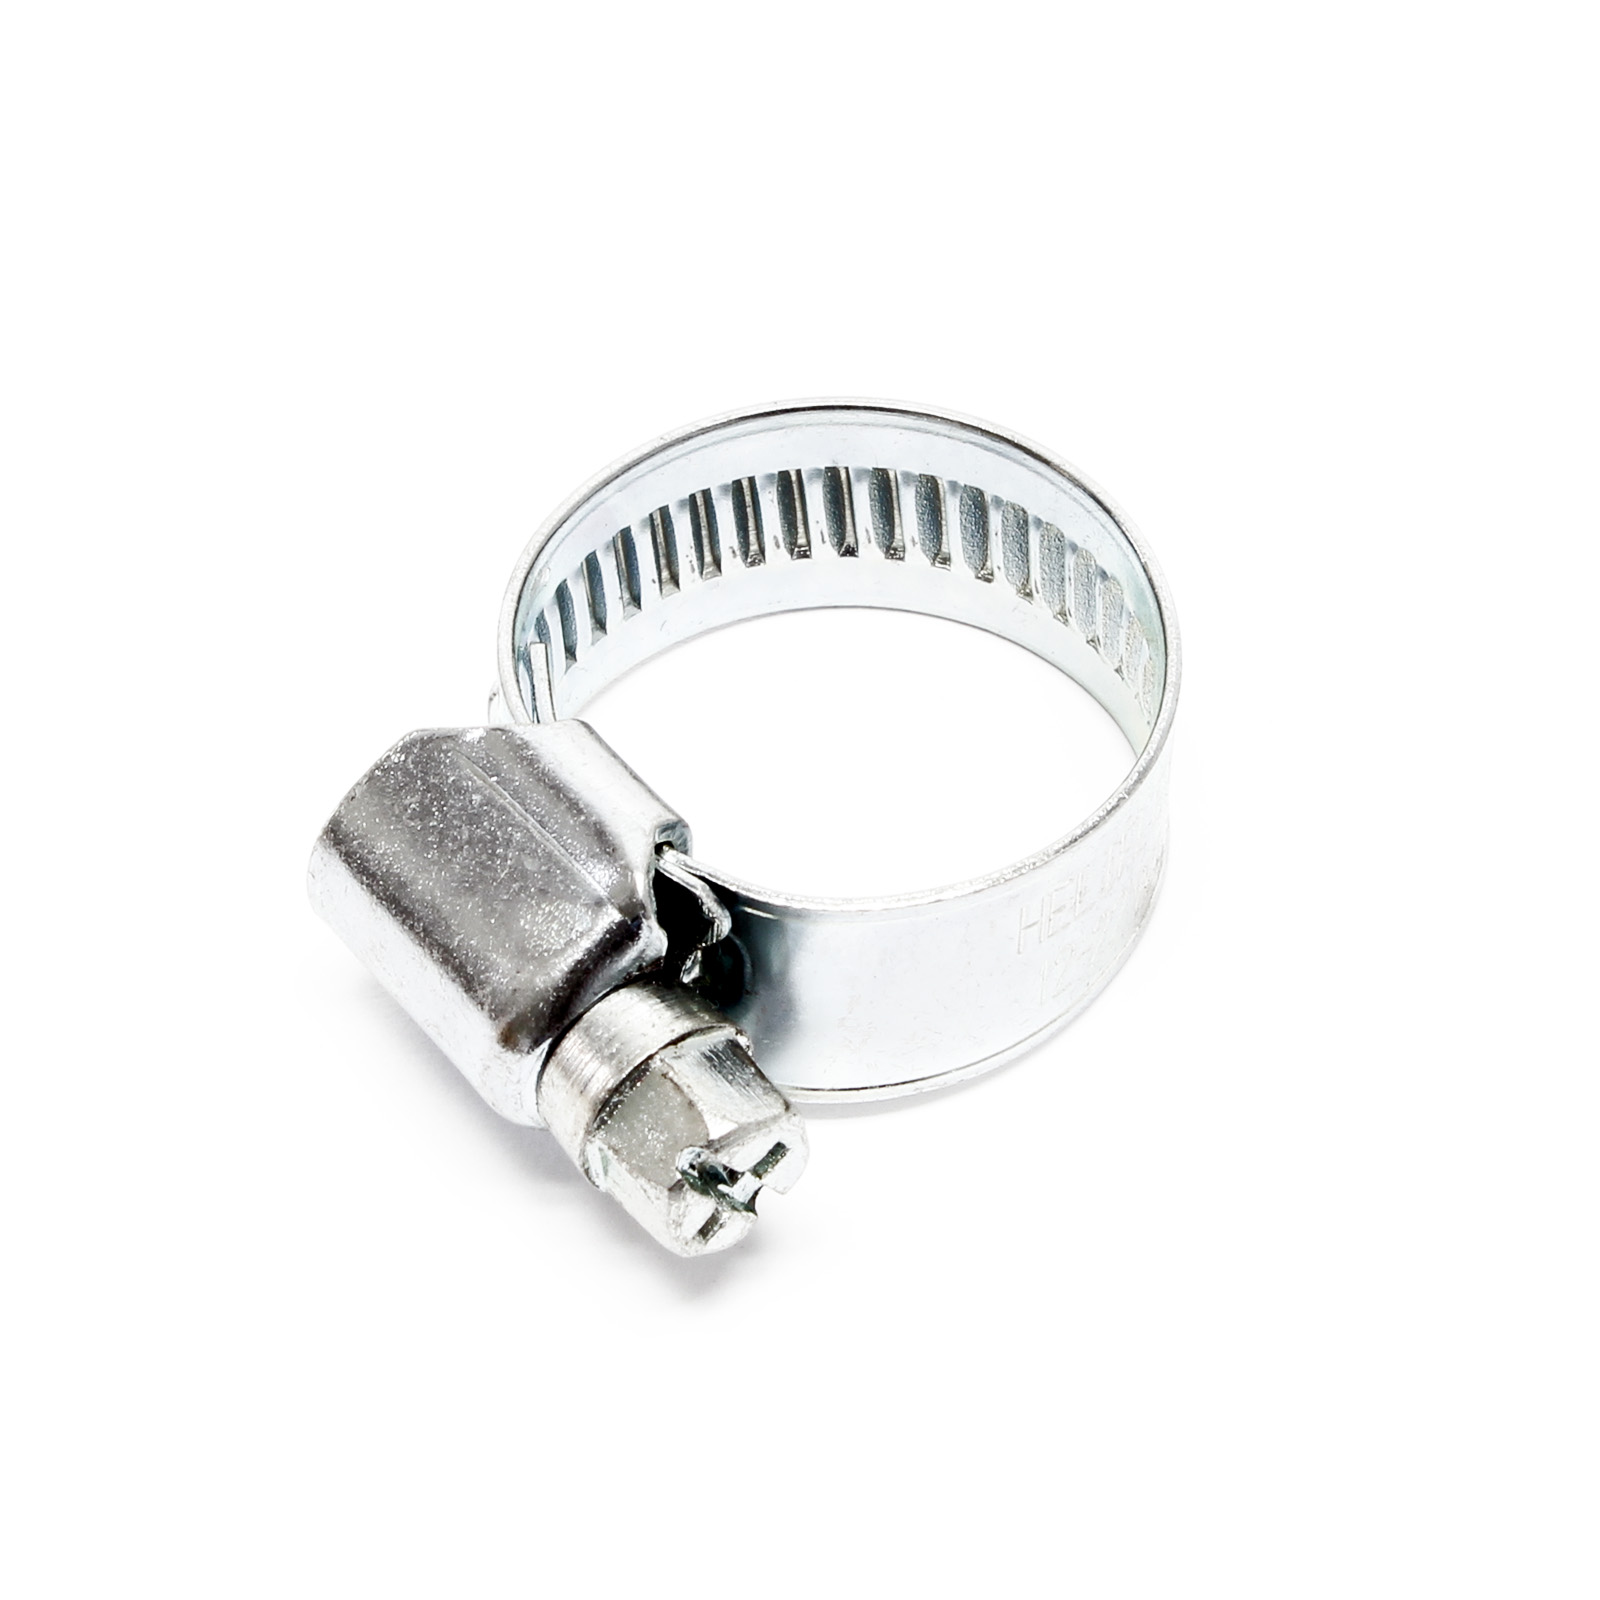 La crémaillère collier de serrage W5 inox 12mm 16-25 mm